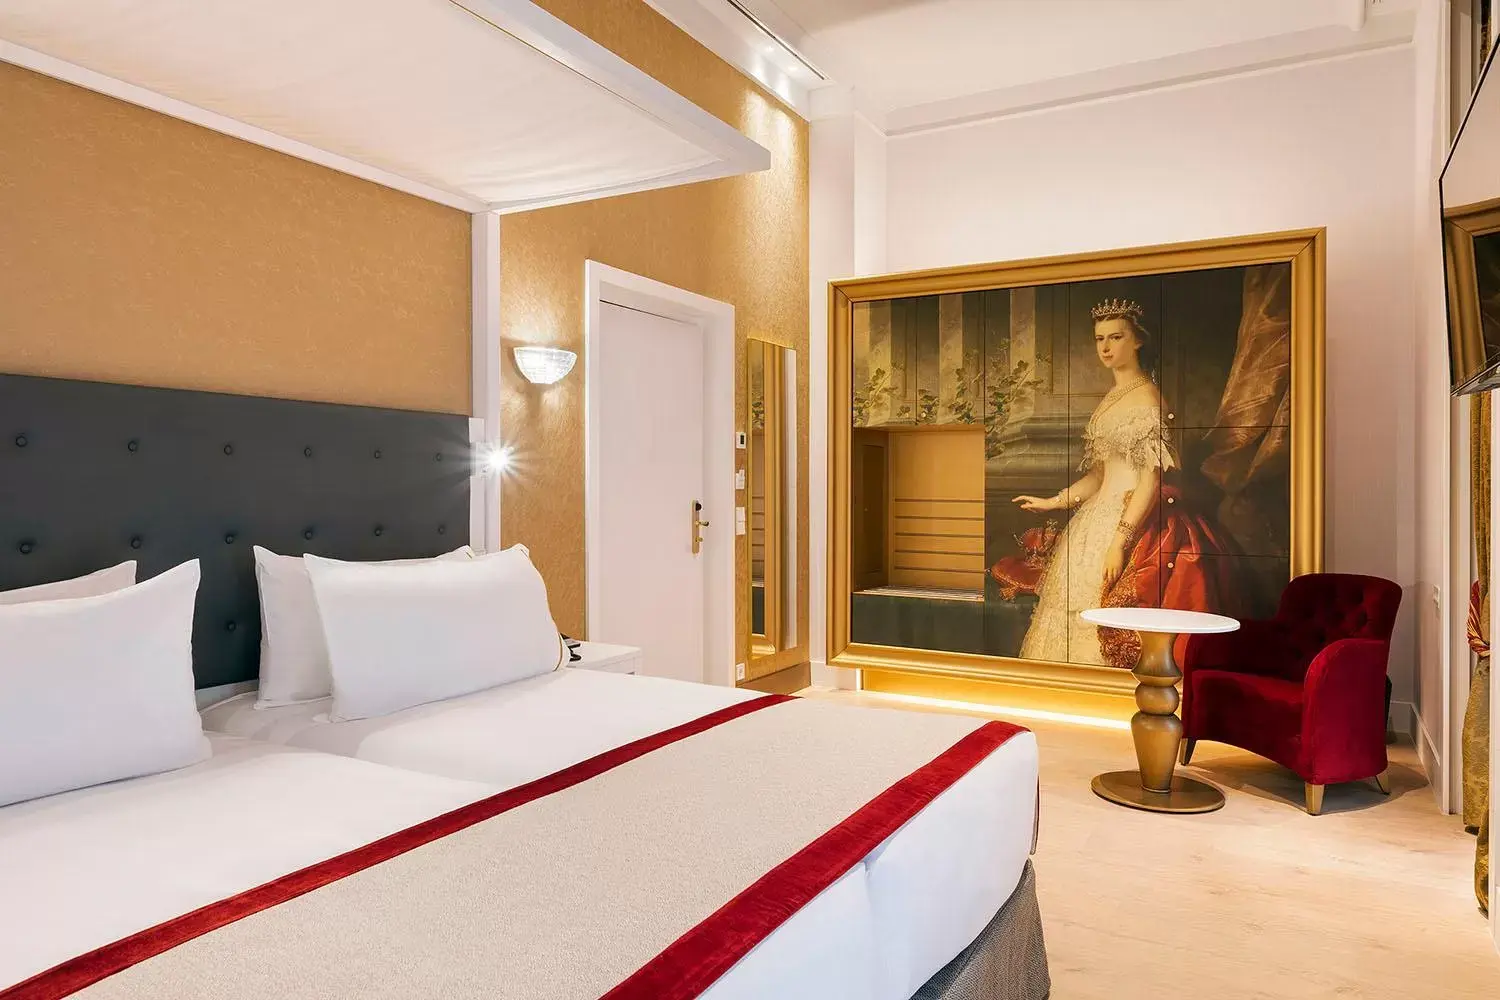 Bed in Áurea Ana Palace by Eurostars Hotel Company